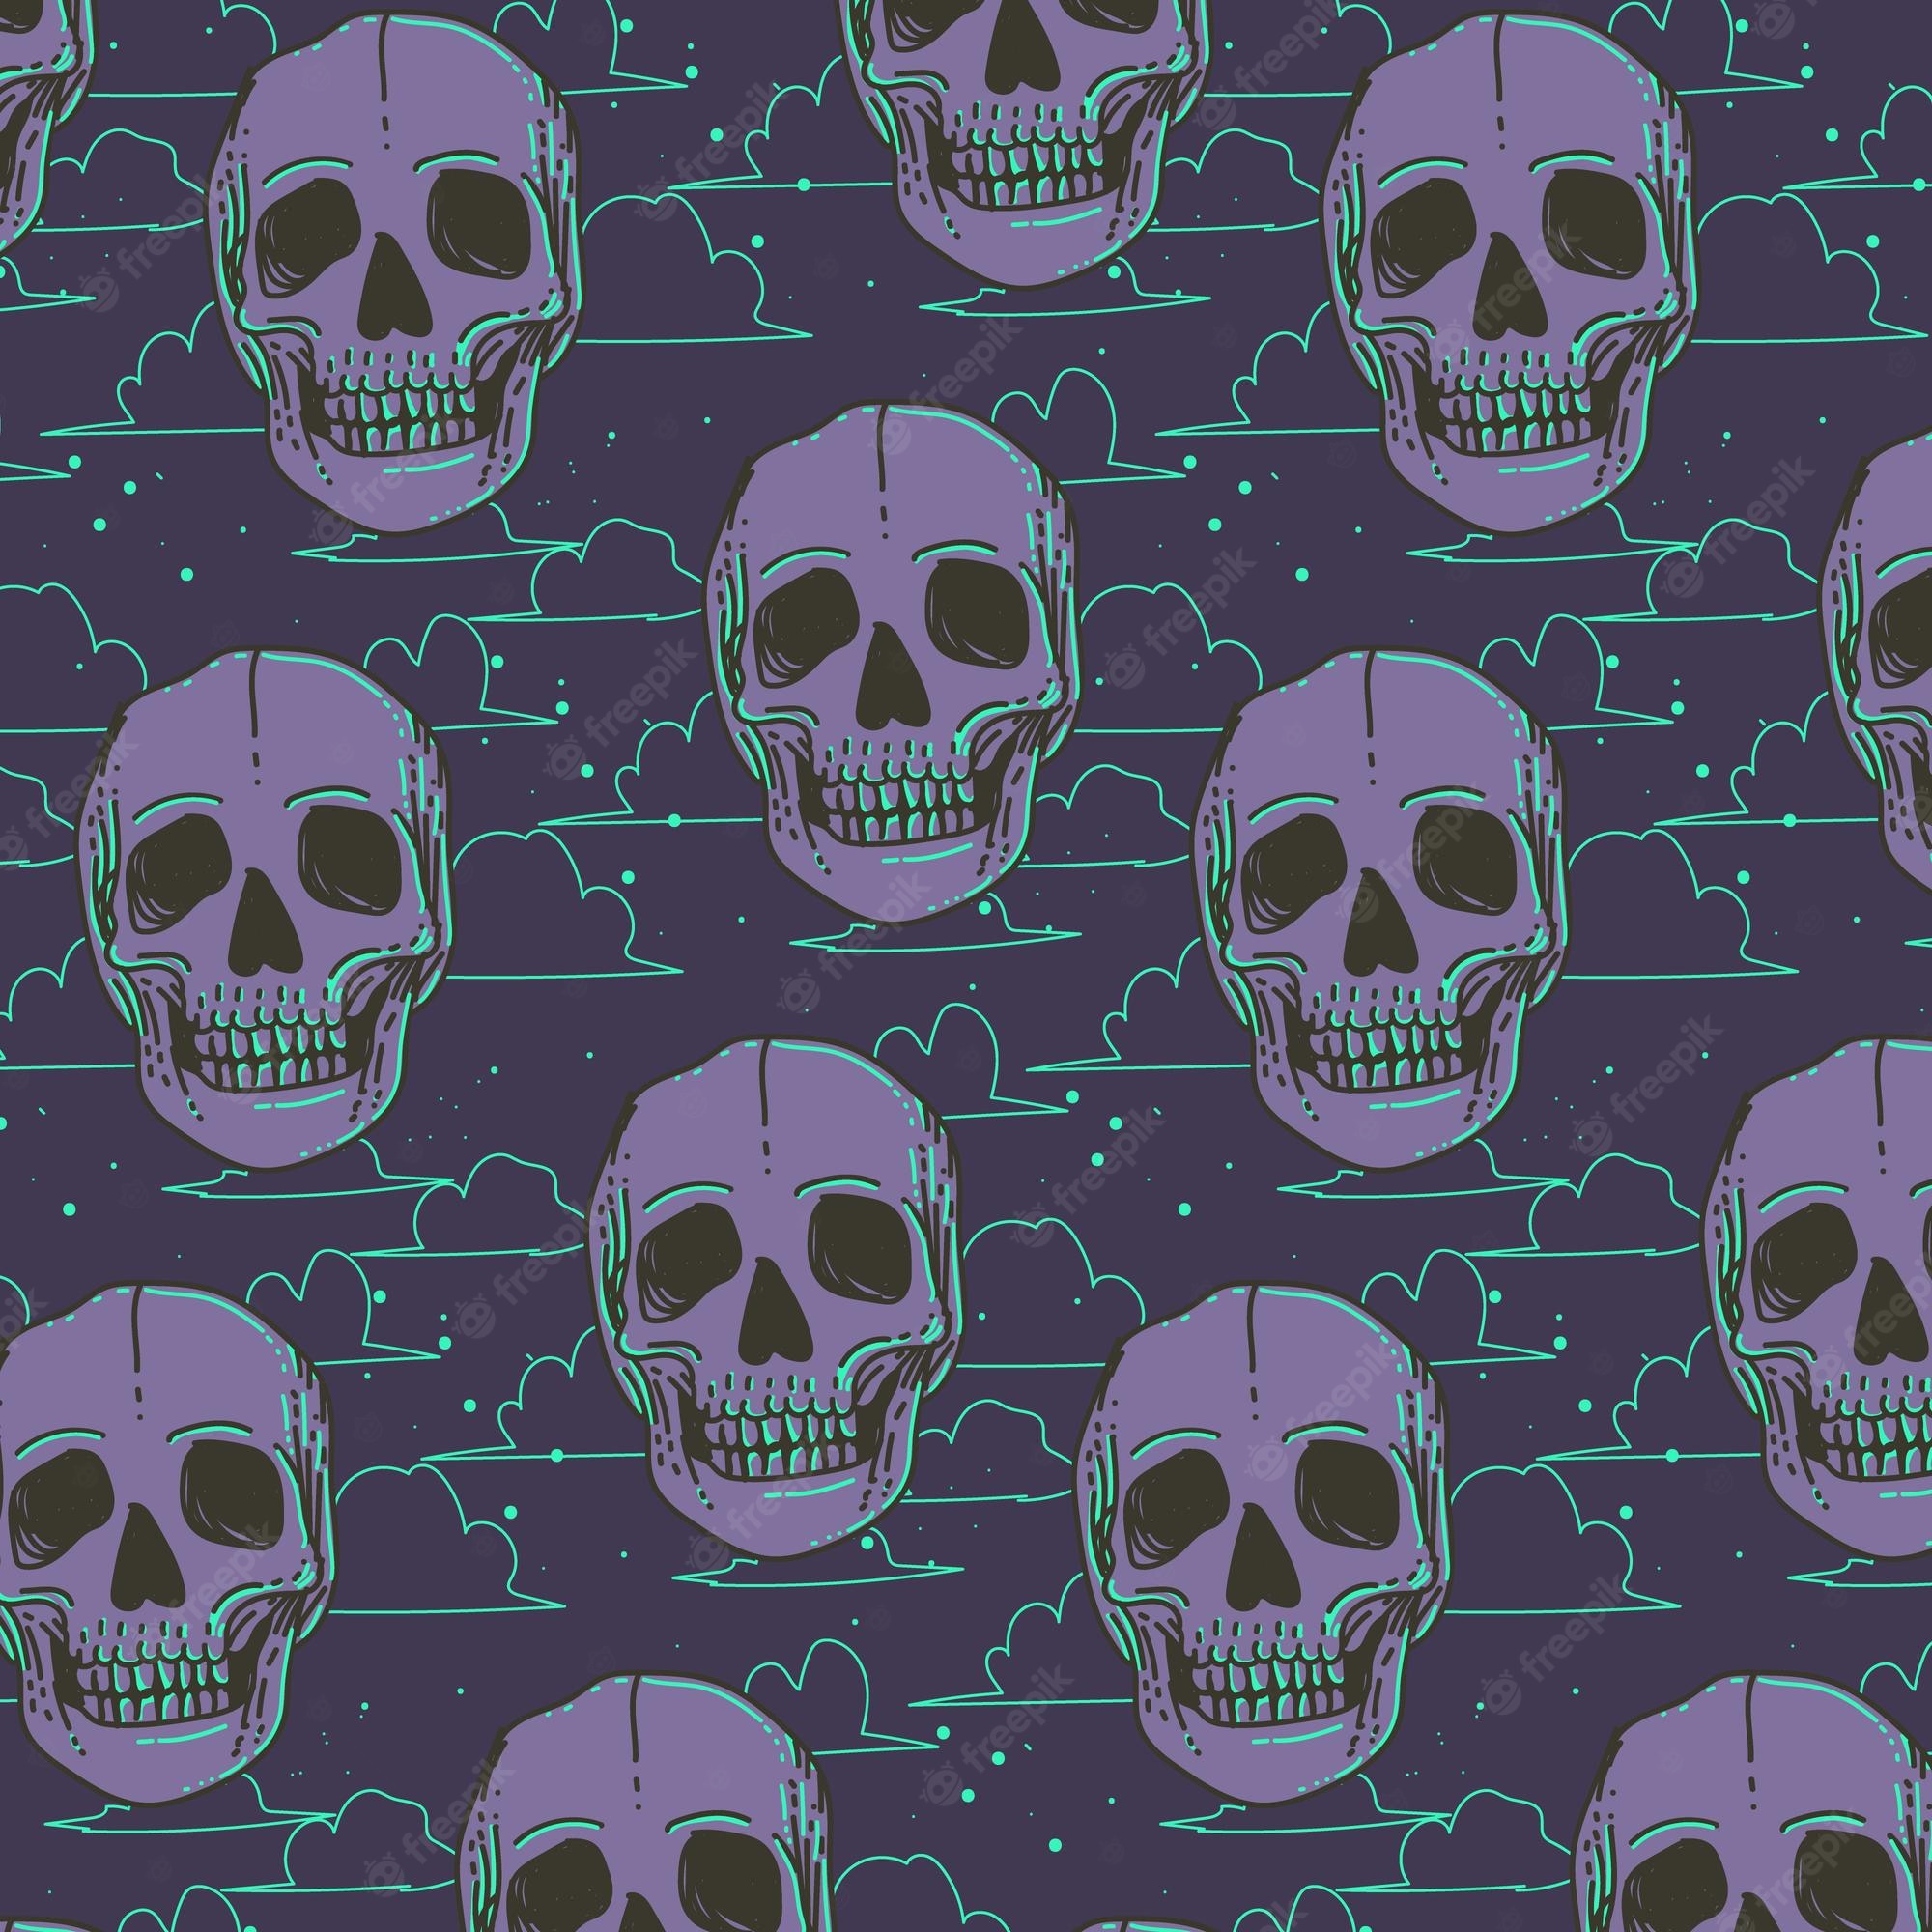 Skull wallpaper Vectors & Illustrations for Free Download